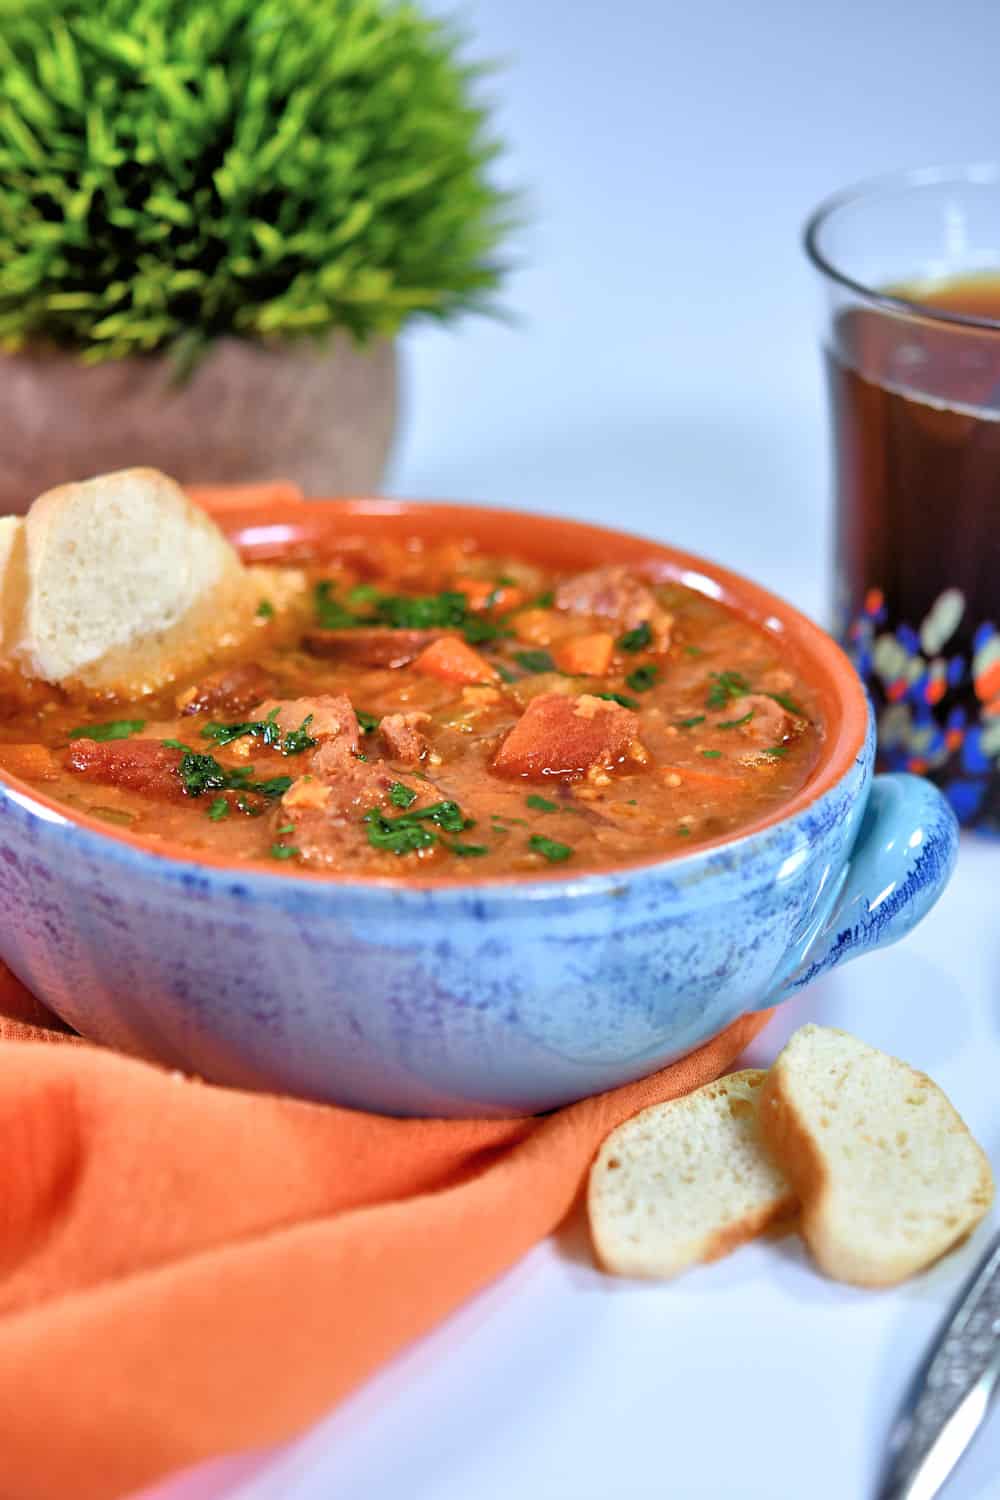 24bite: Kielbasa Sausage Soup with Lentils Instant Pot recipe by Christian Guzman